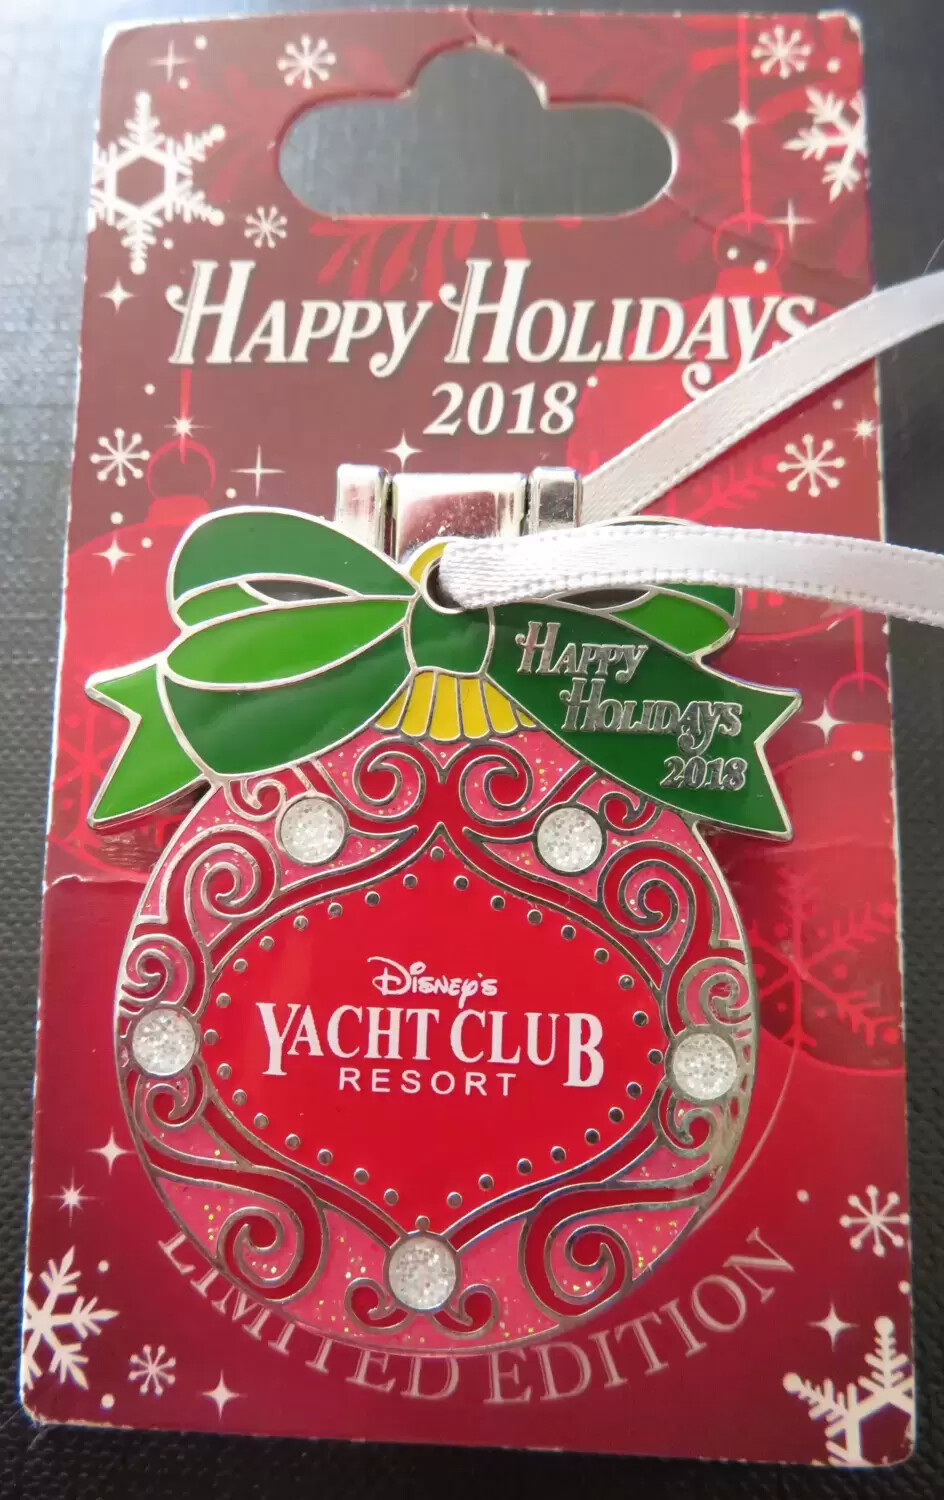 Happy Holidays - Happy Holidays 2018 - Belle - Yacht Club Resort